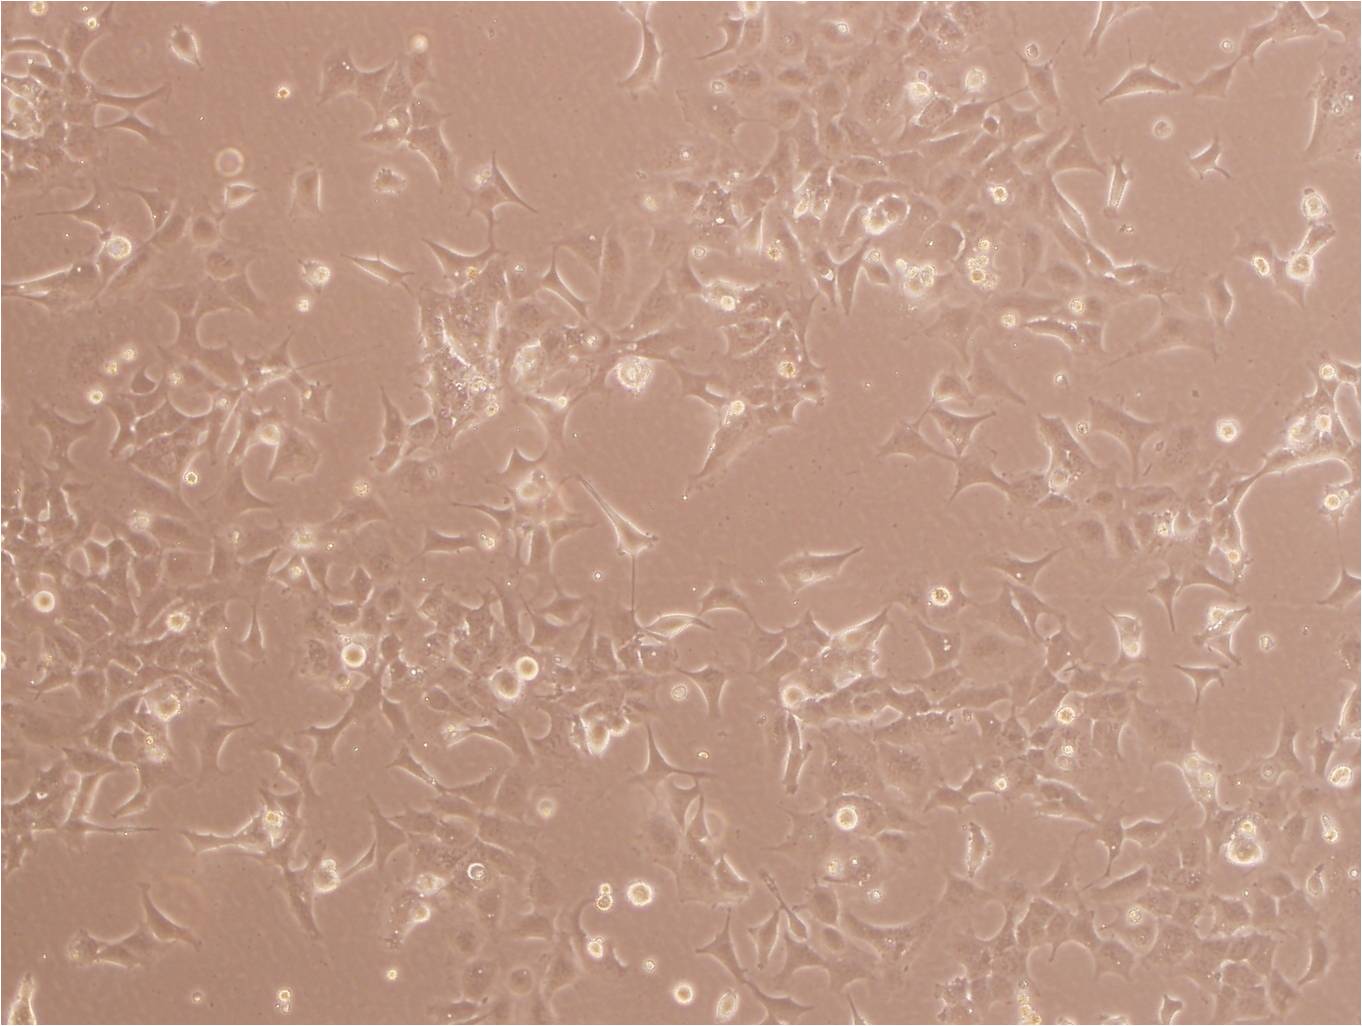 SSP-25 Cells|人肝胆管癌细胞系,SSP-25 Cells